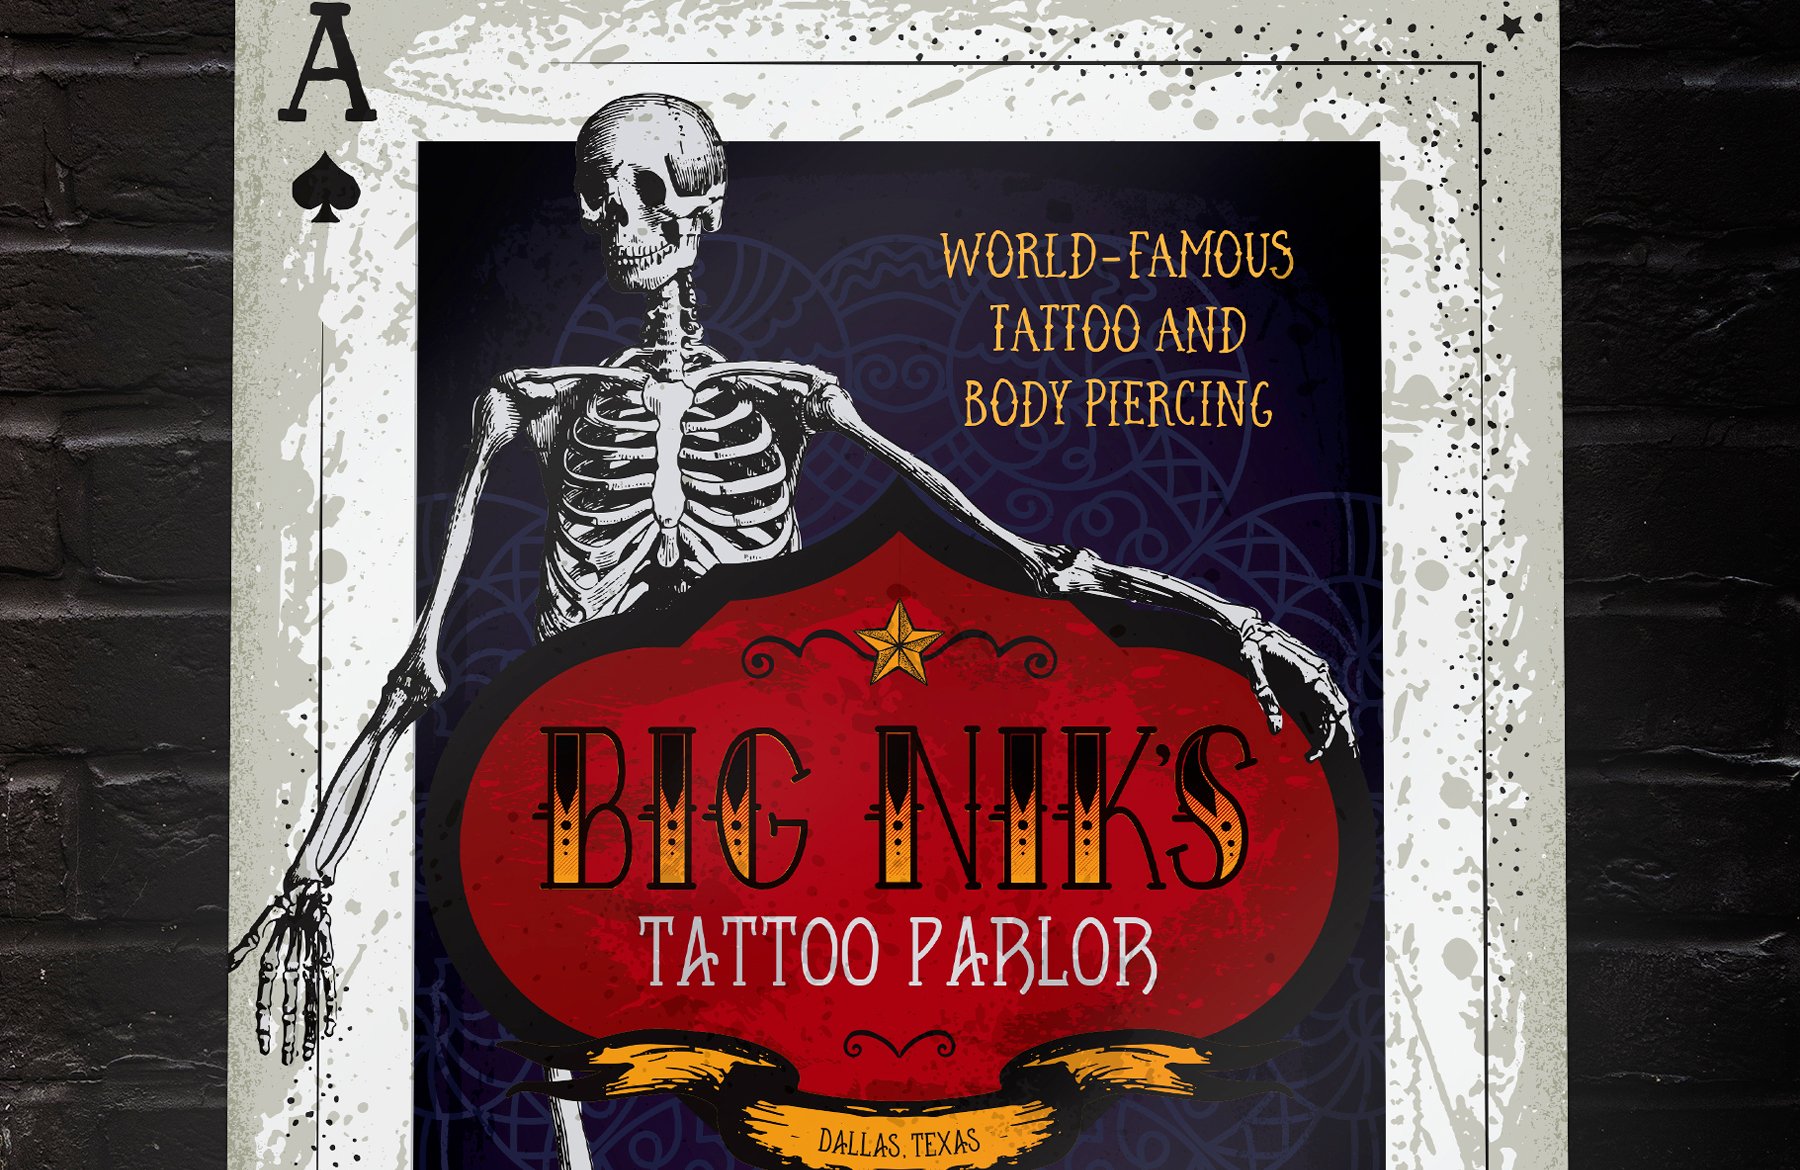 Tattoo Shop Graphics, Designs & Templates | GraphicRiver